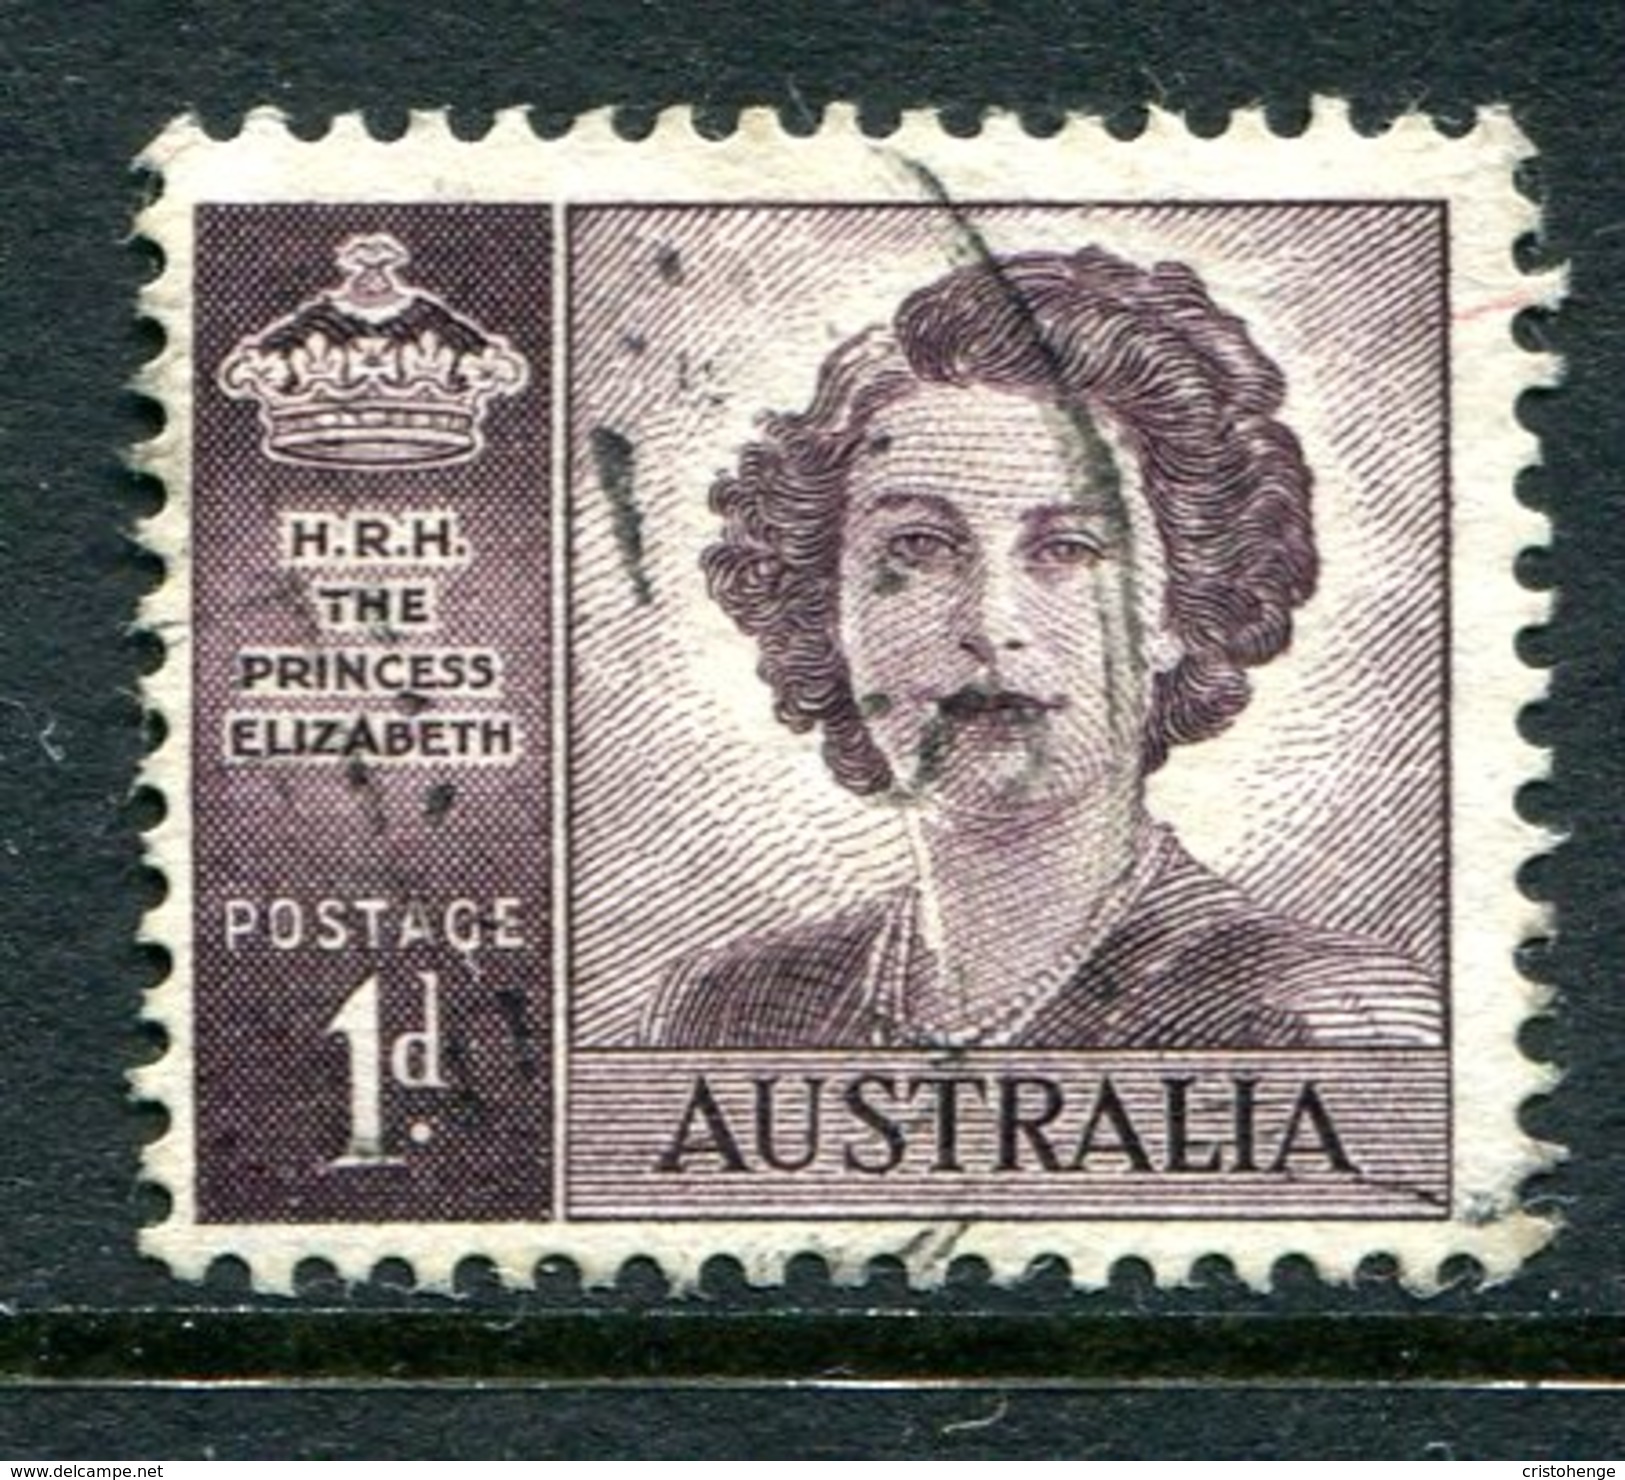 Australia 1947-52 Marriage Of Princess Elizabeth - No Wmk. Used (SG 222a) - Neufs